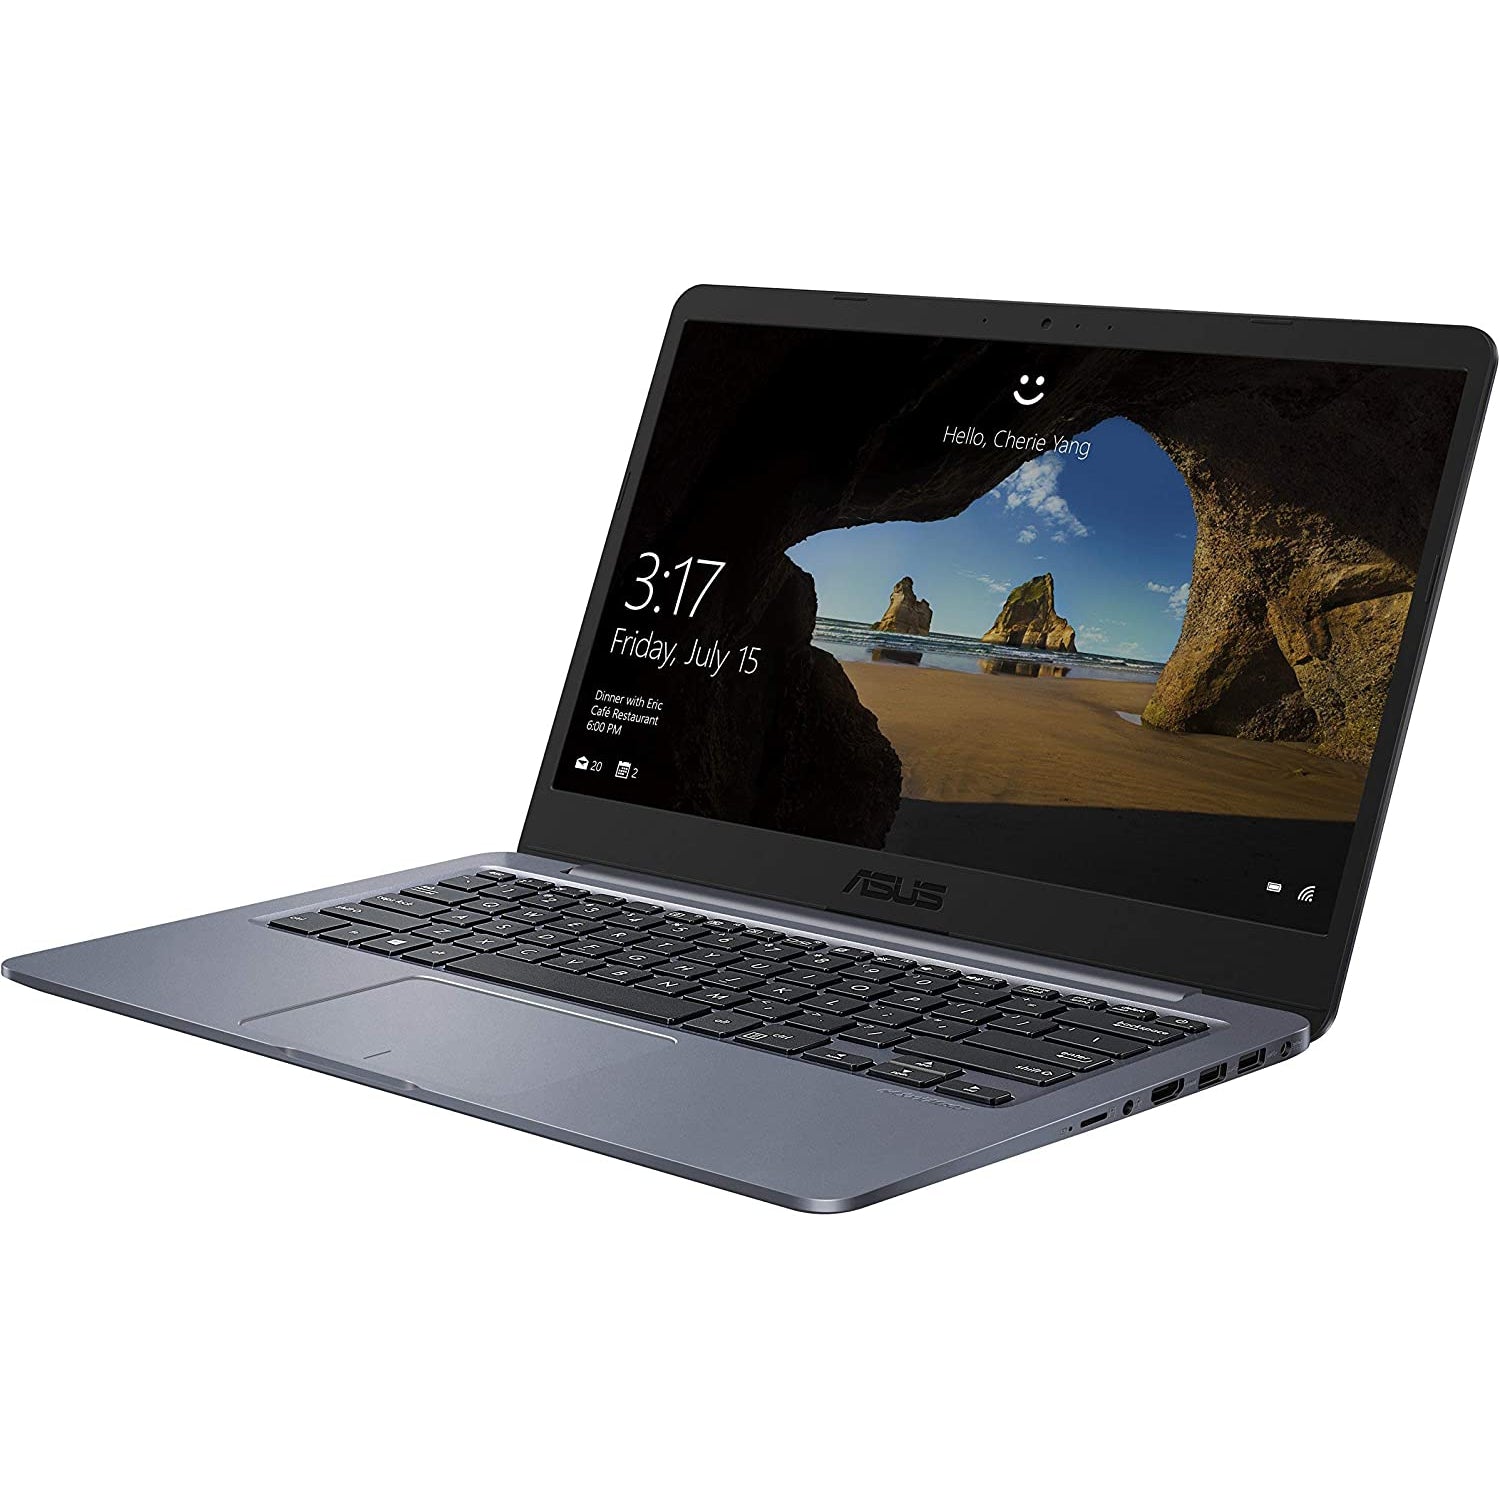 ASUS Vivobook E406 Laptop, Intel Celeron Processor, 4GB RAM, 64GB eMMC, 14”, Star Grey